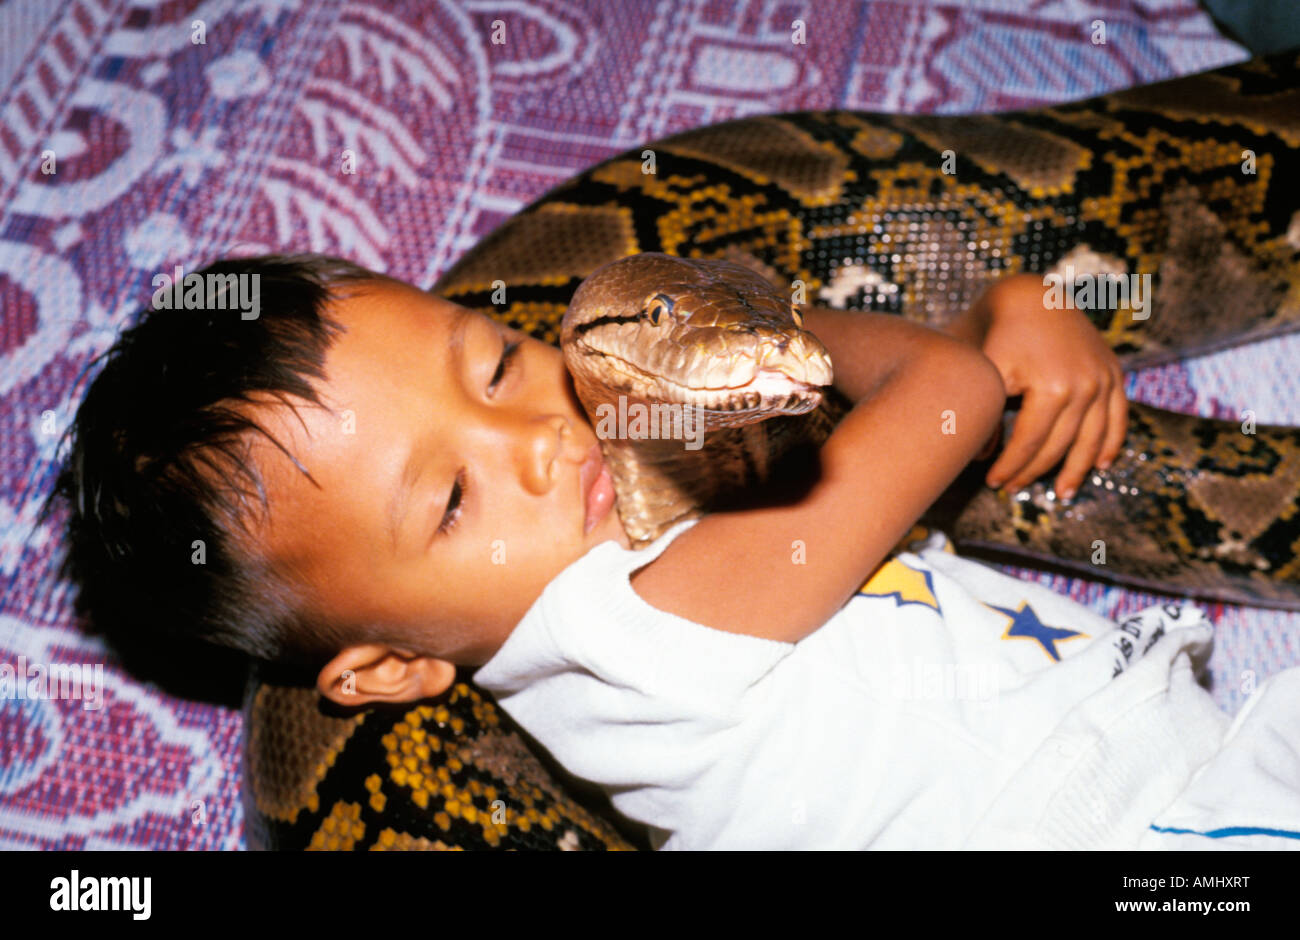 Netzpython indonesien familly with tame Reticulated Python Python reticulatus animals exotische Haustiere Haustiere house pets K Stock Photo